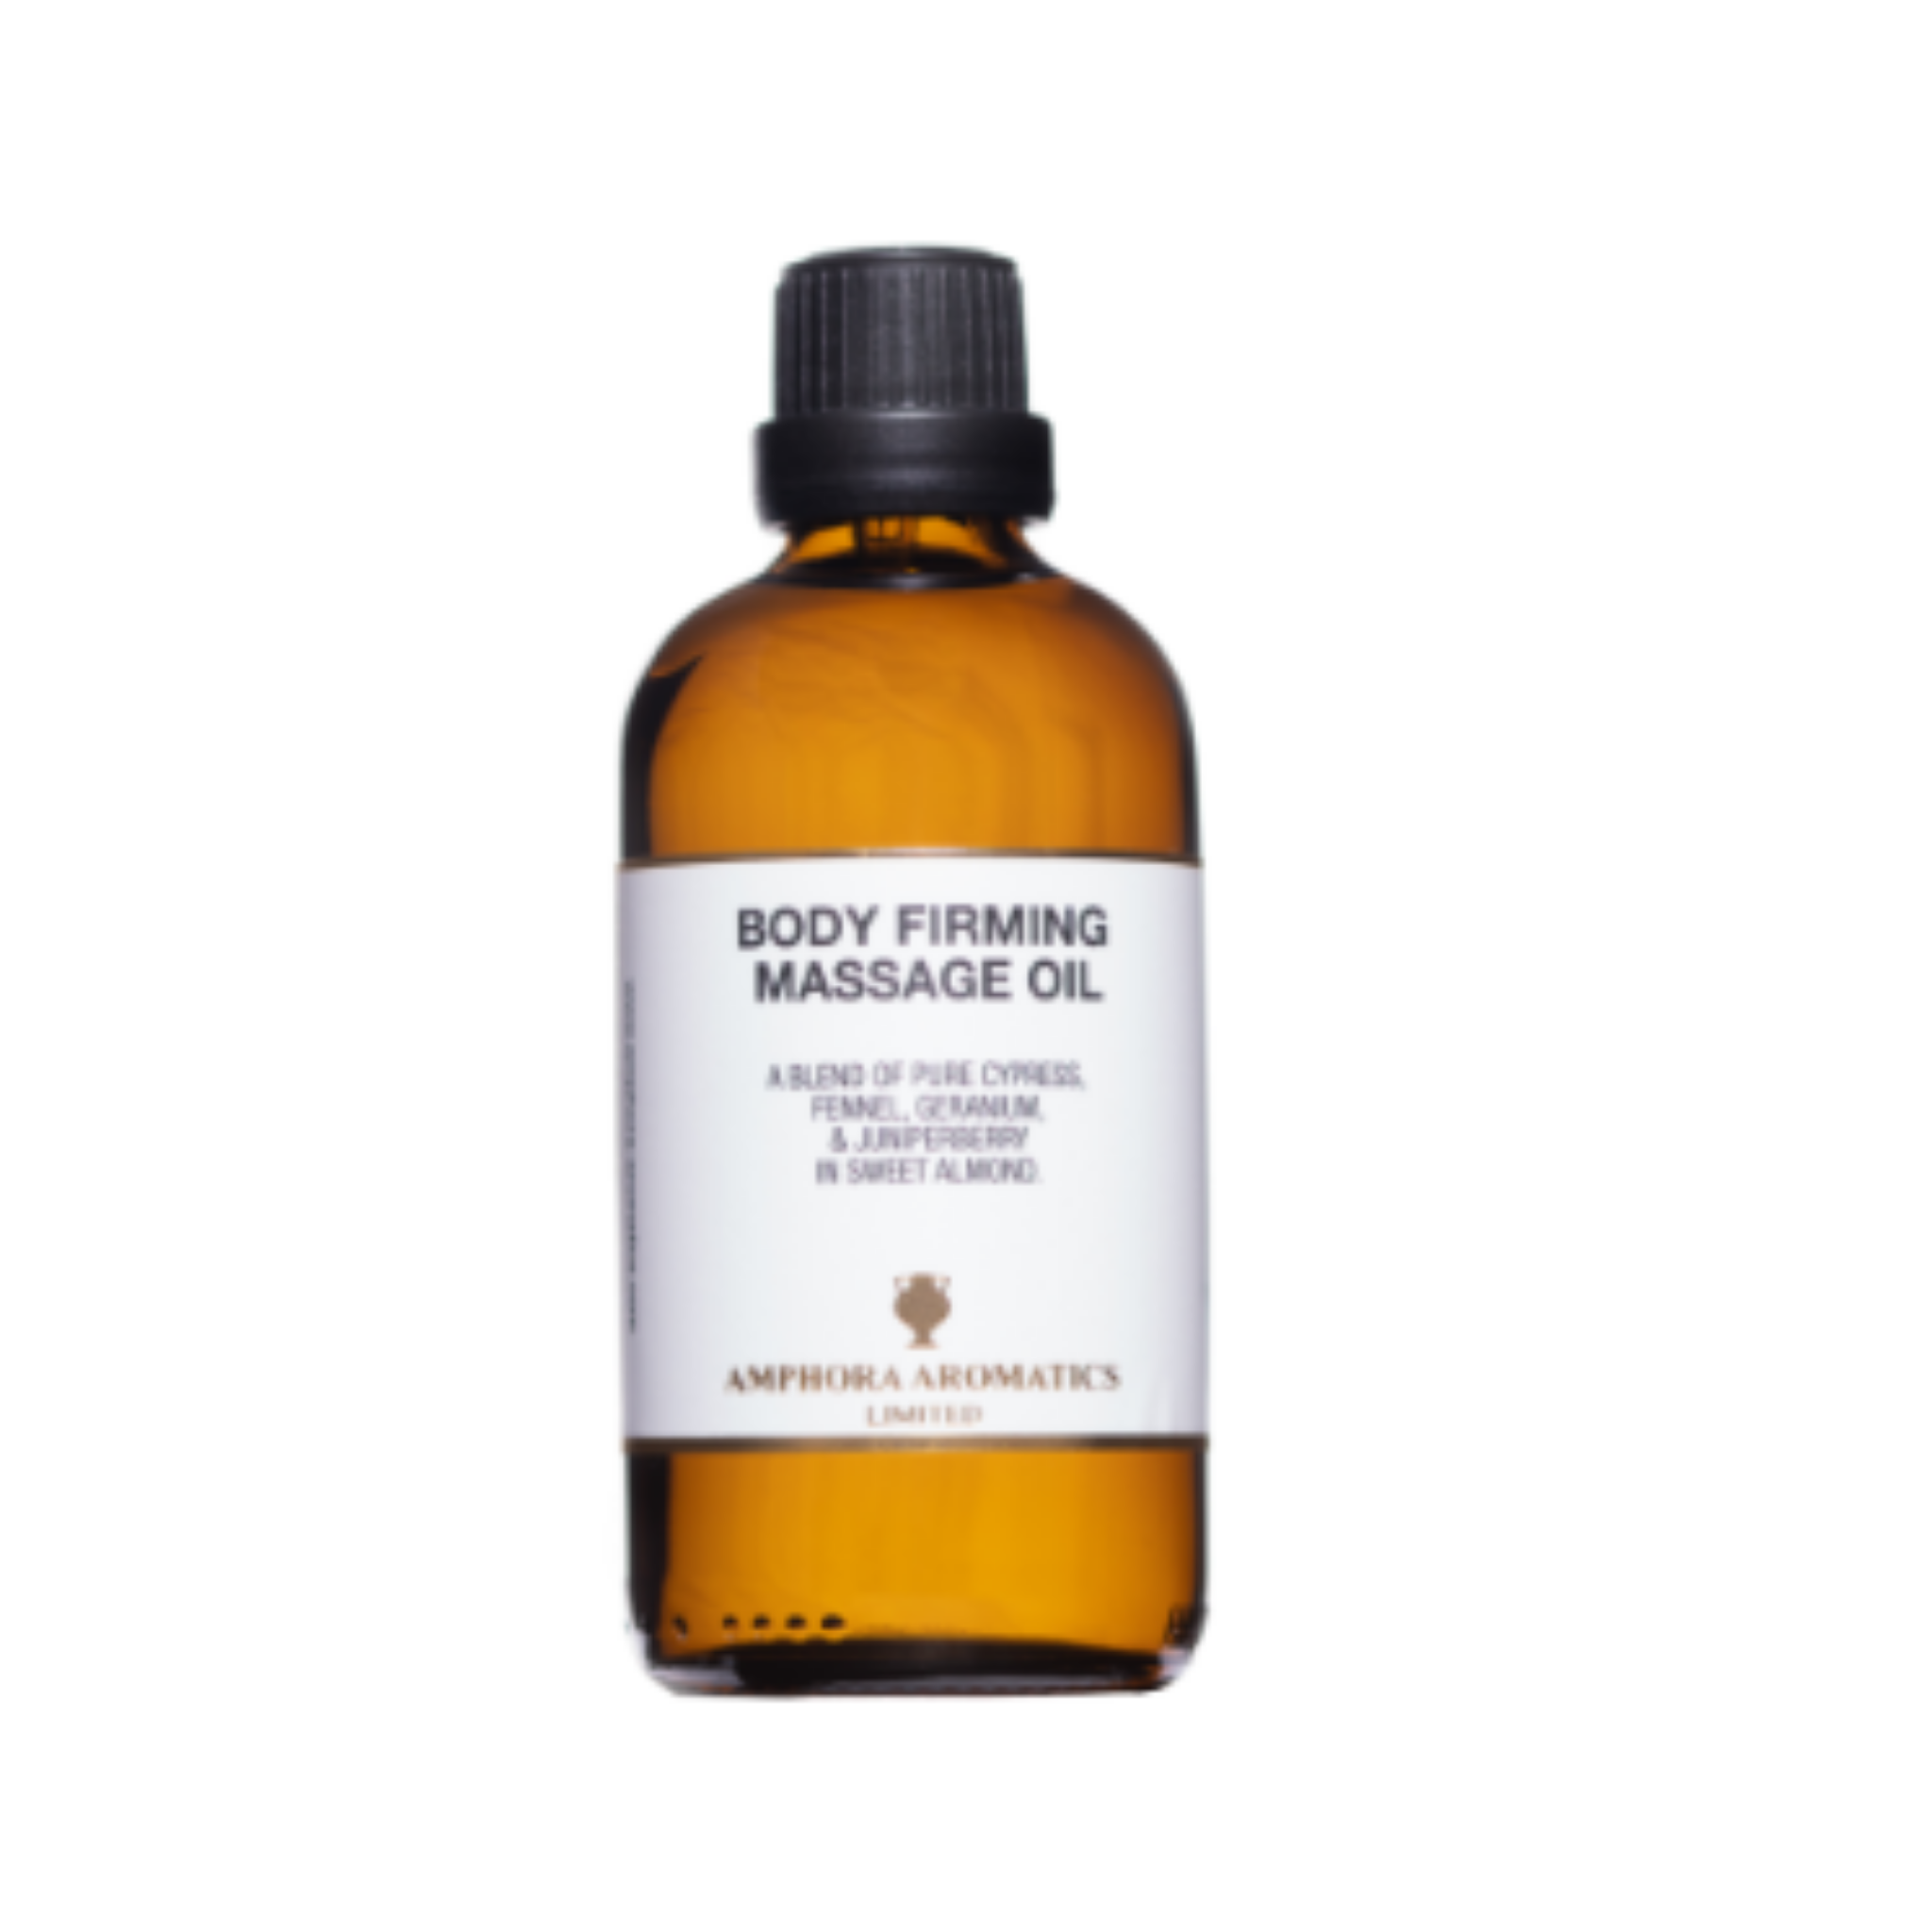 Body Firming Massage Oil by Amphora Aromatics